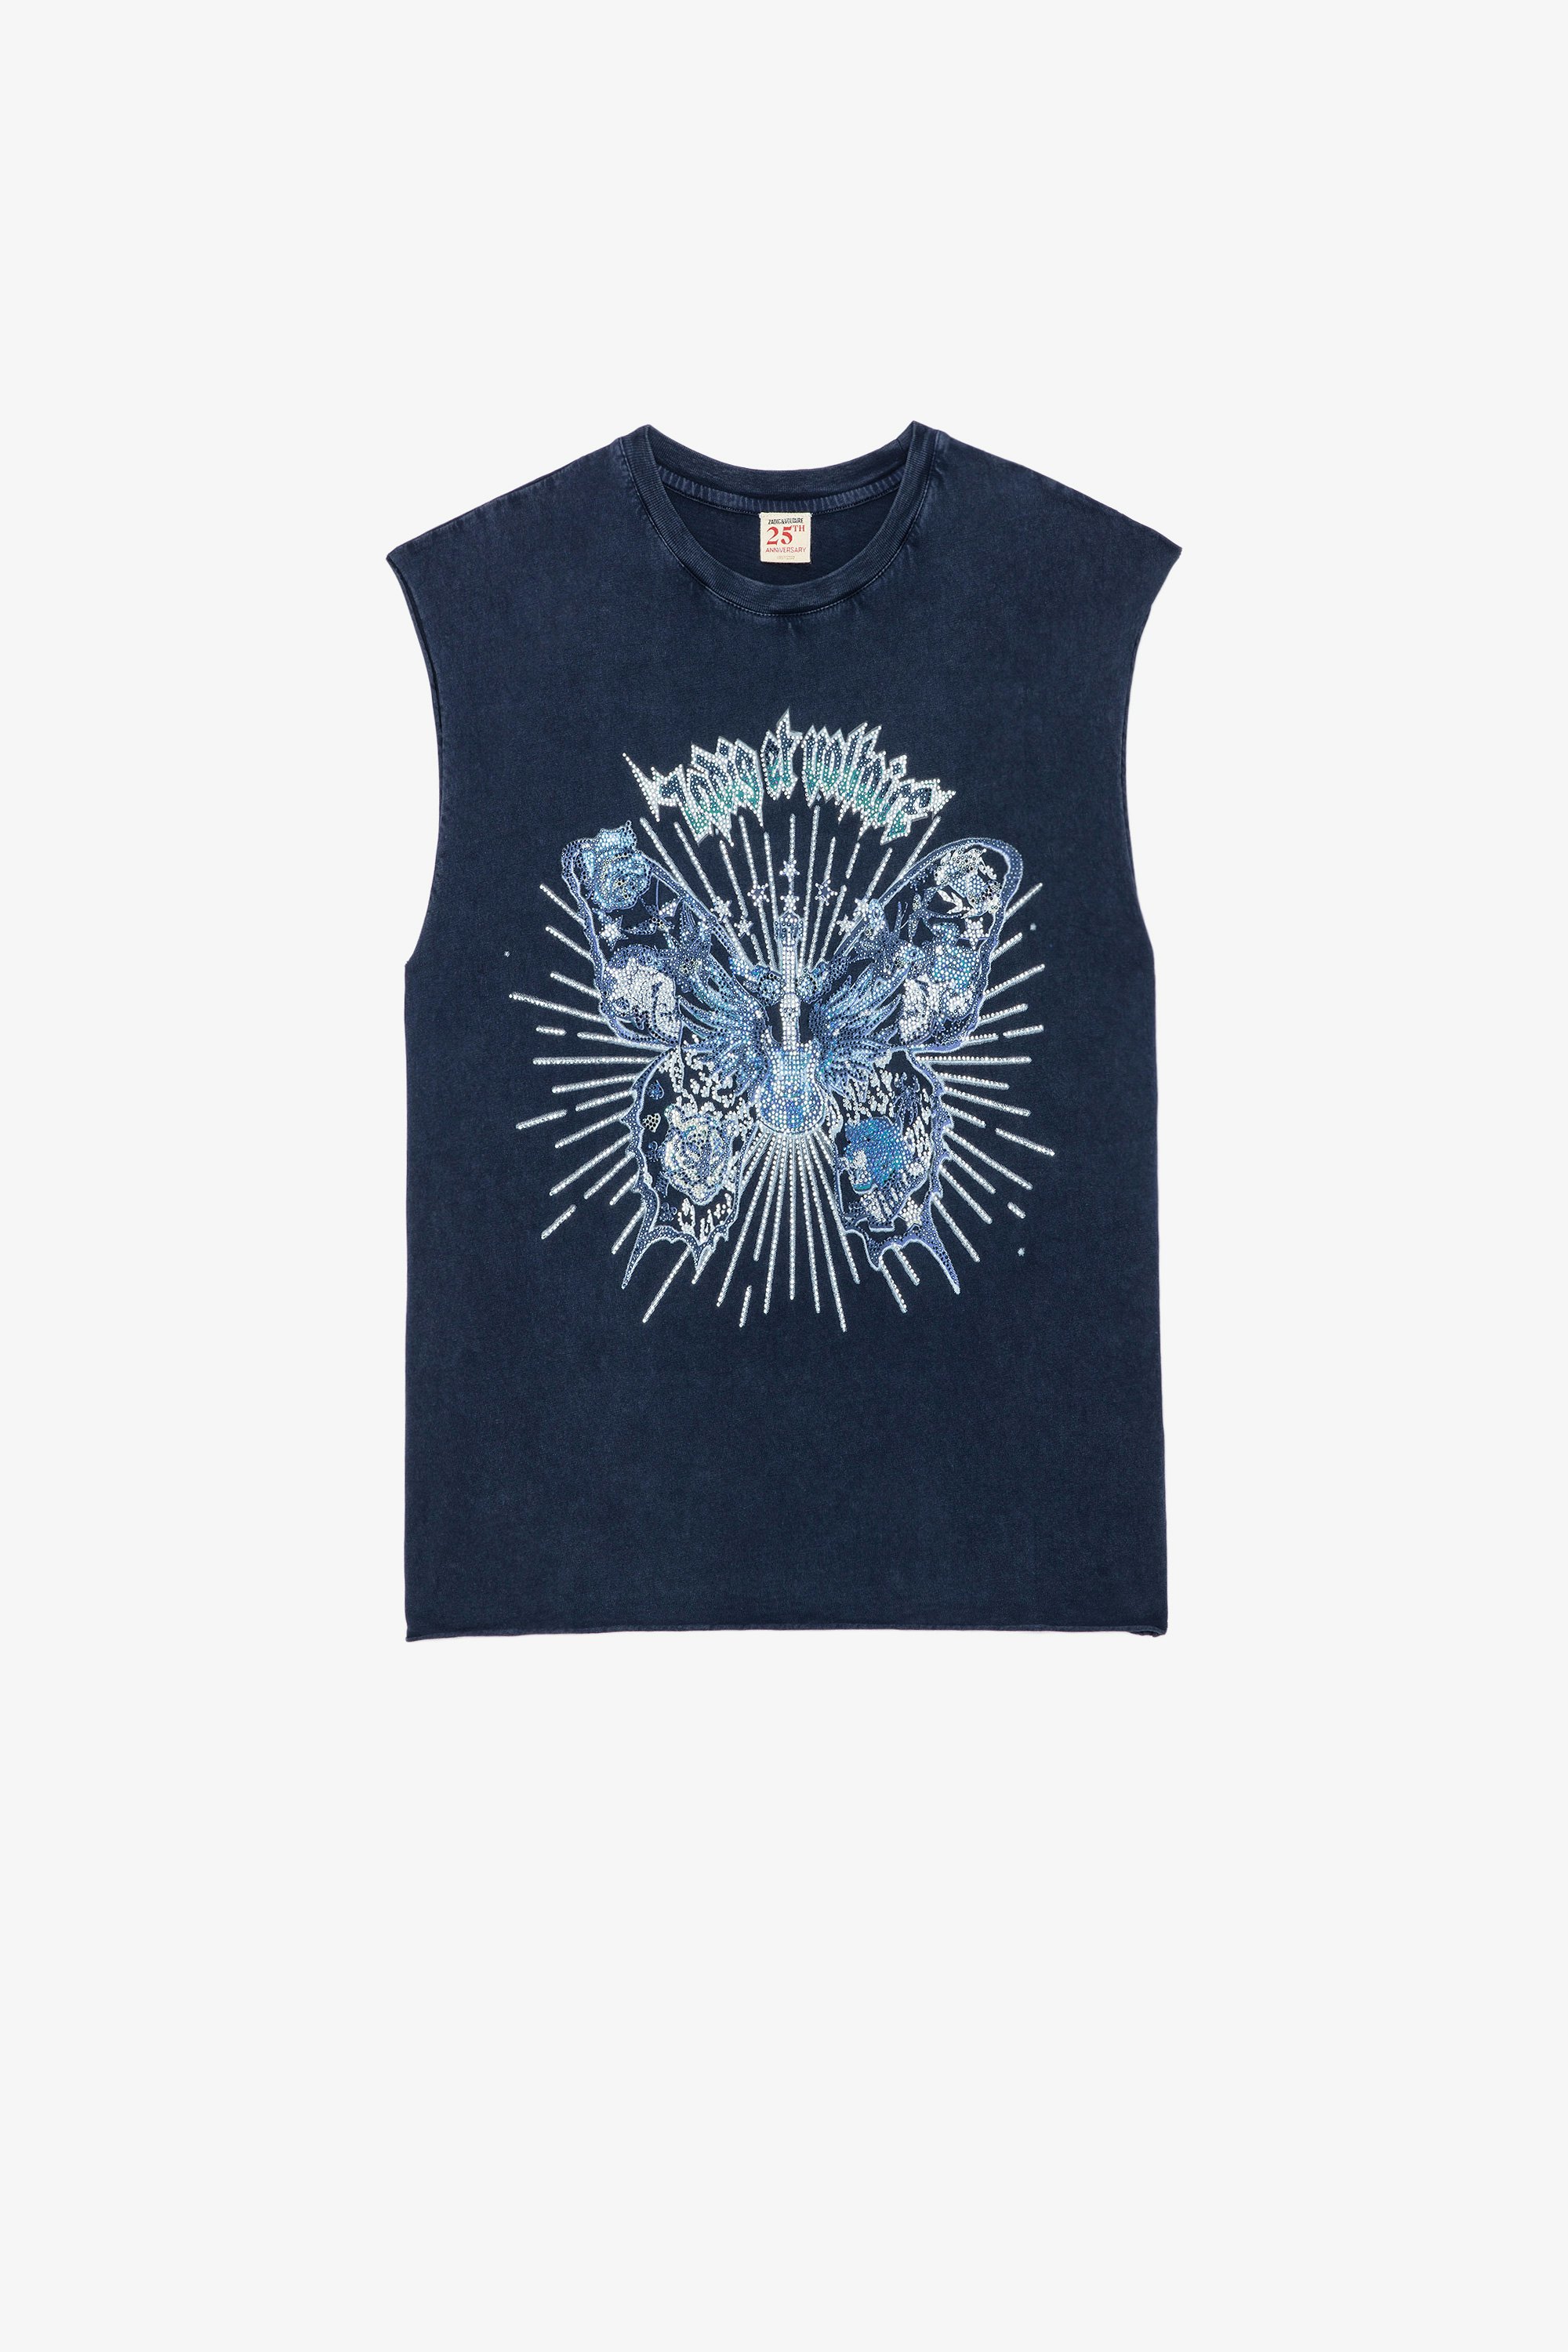 Camiseta de tirantes Cecilia Butterfly Camiseta de tirantes de algodón azul marino para mujer con estampado de mariposa con cristales